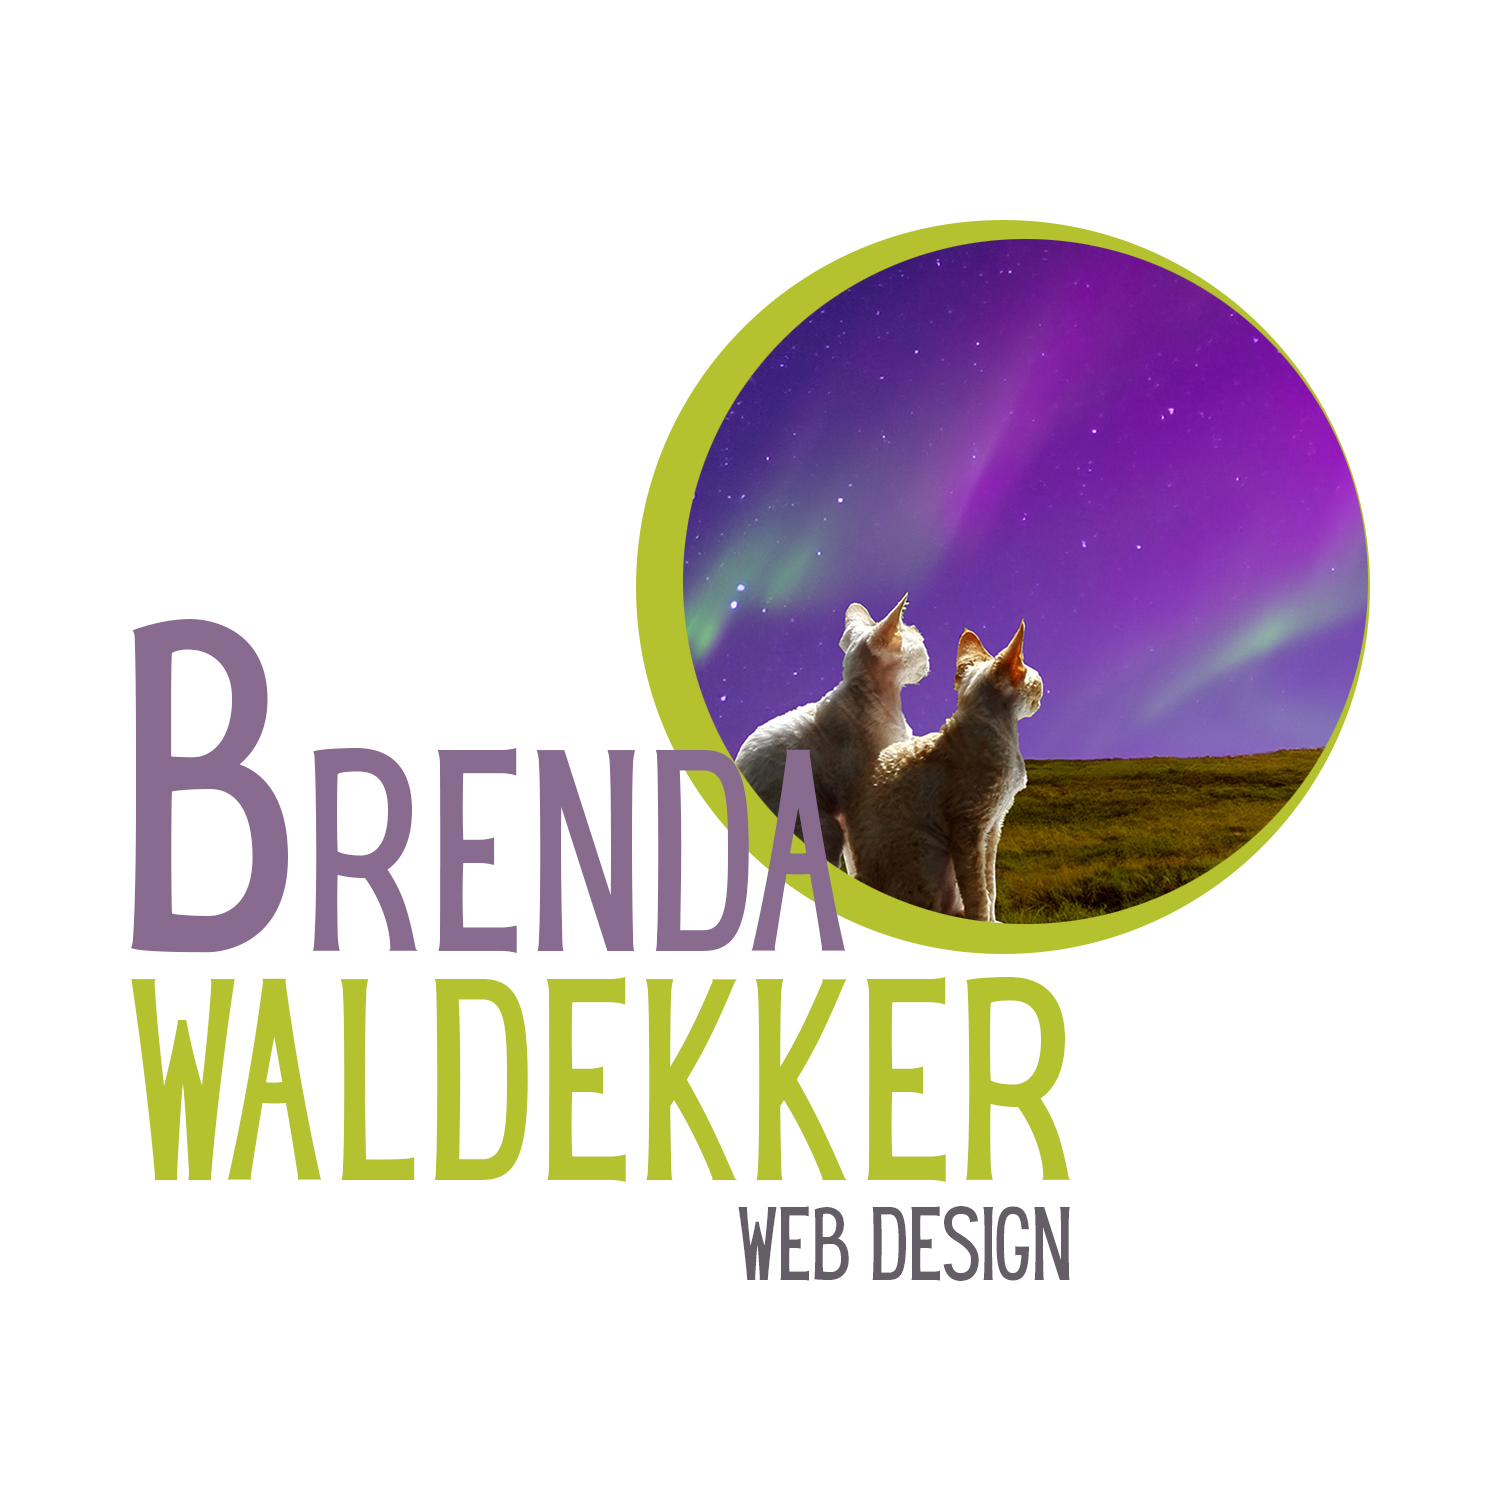 Brenda Waldekker Web Design